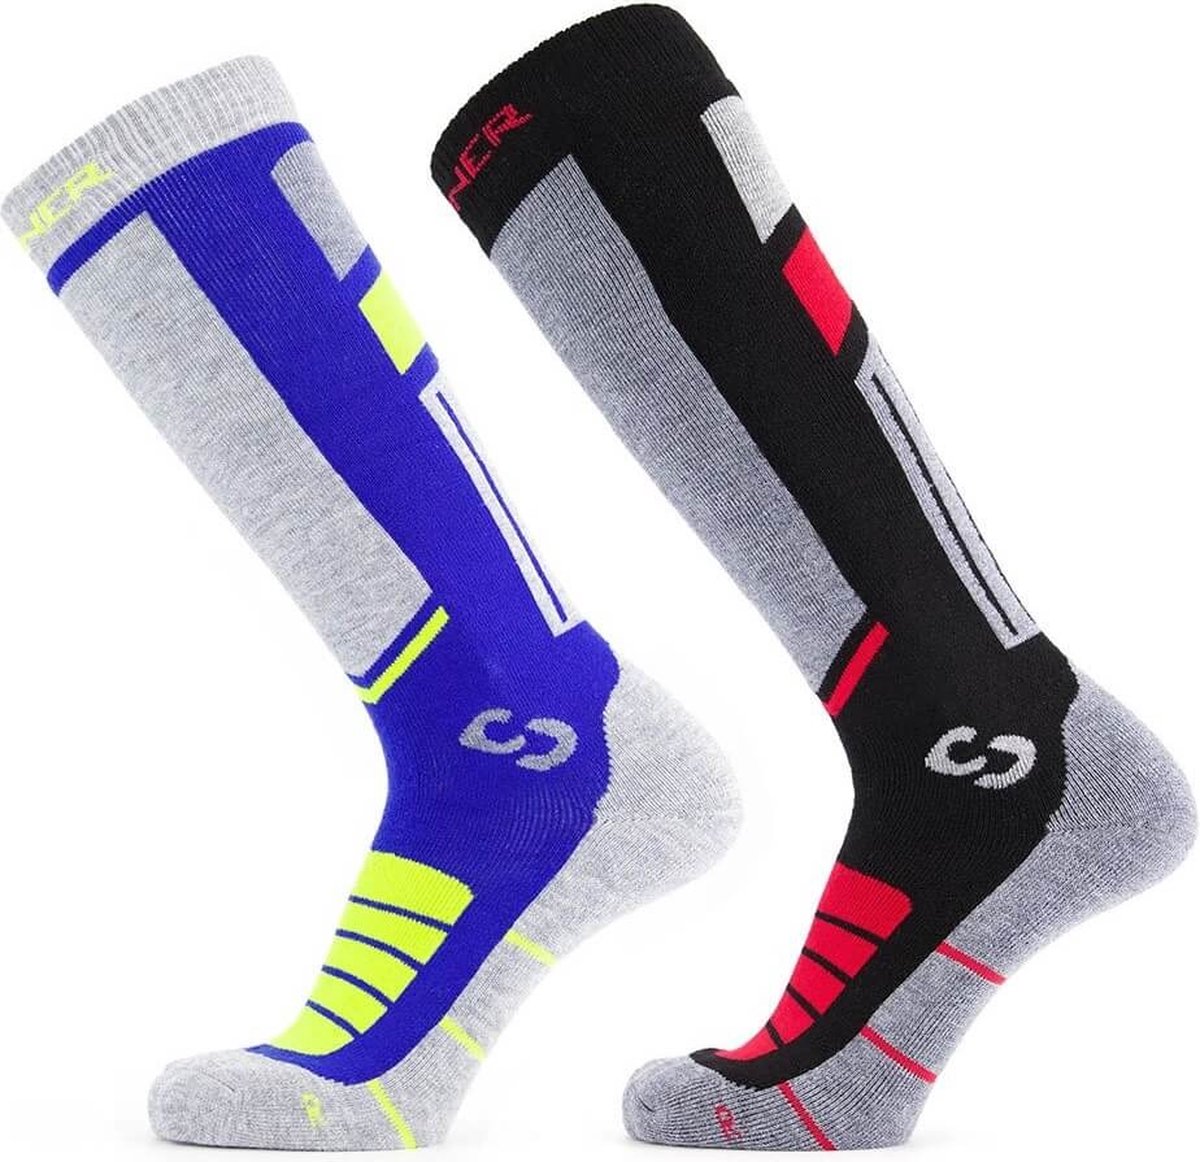 SINNER Pro Socks II Skisokken (Dubbelverpakking) - Blauw/Rood - 45-47